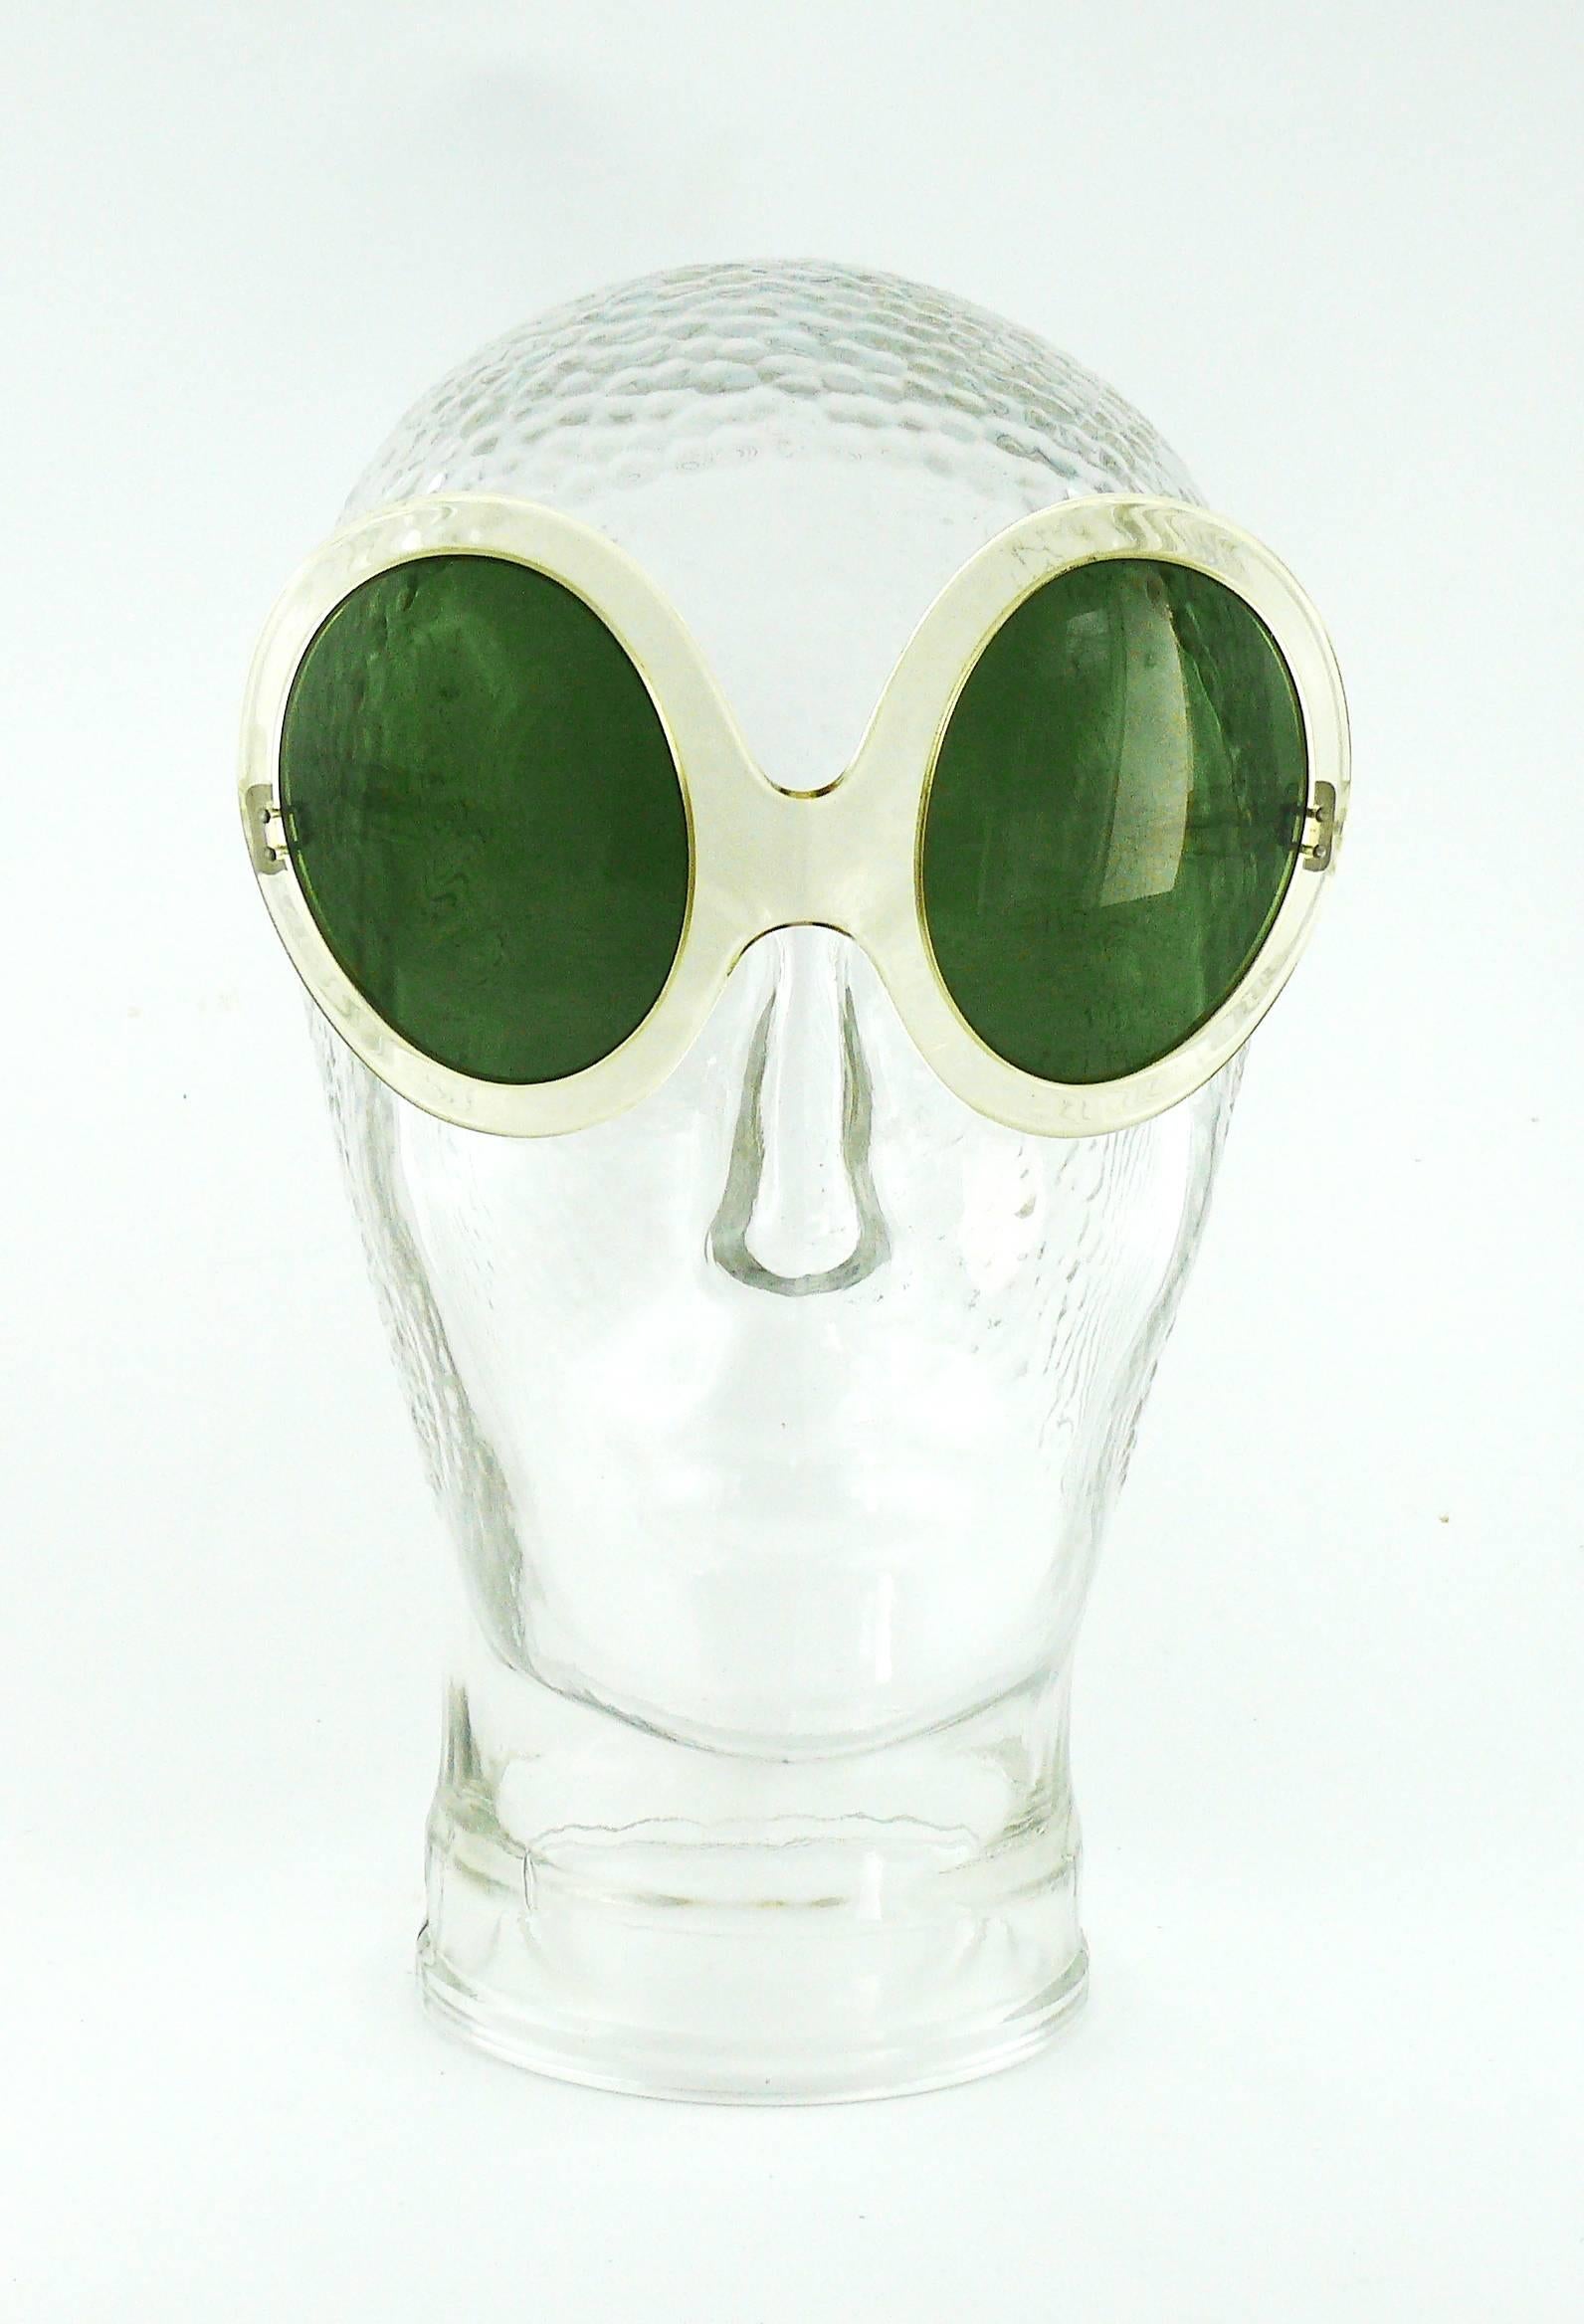 PIERRE CARDIN rare vintage lucite oversized avantgarde sunglasses.

Green lenses.

Embossed PIERRE CARDIN.
France.

Indicative measurements : max. frame width approx. 13.8 cm (5.43 inches) / lenses width approx. 5.1 cm (2.00 inches) / lenses height